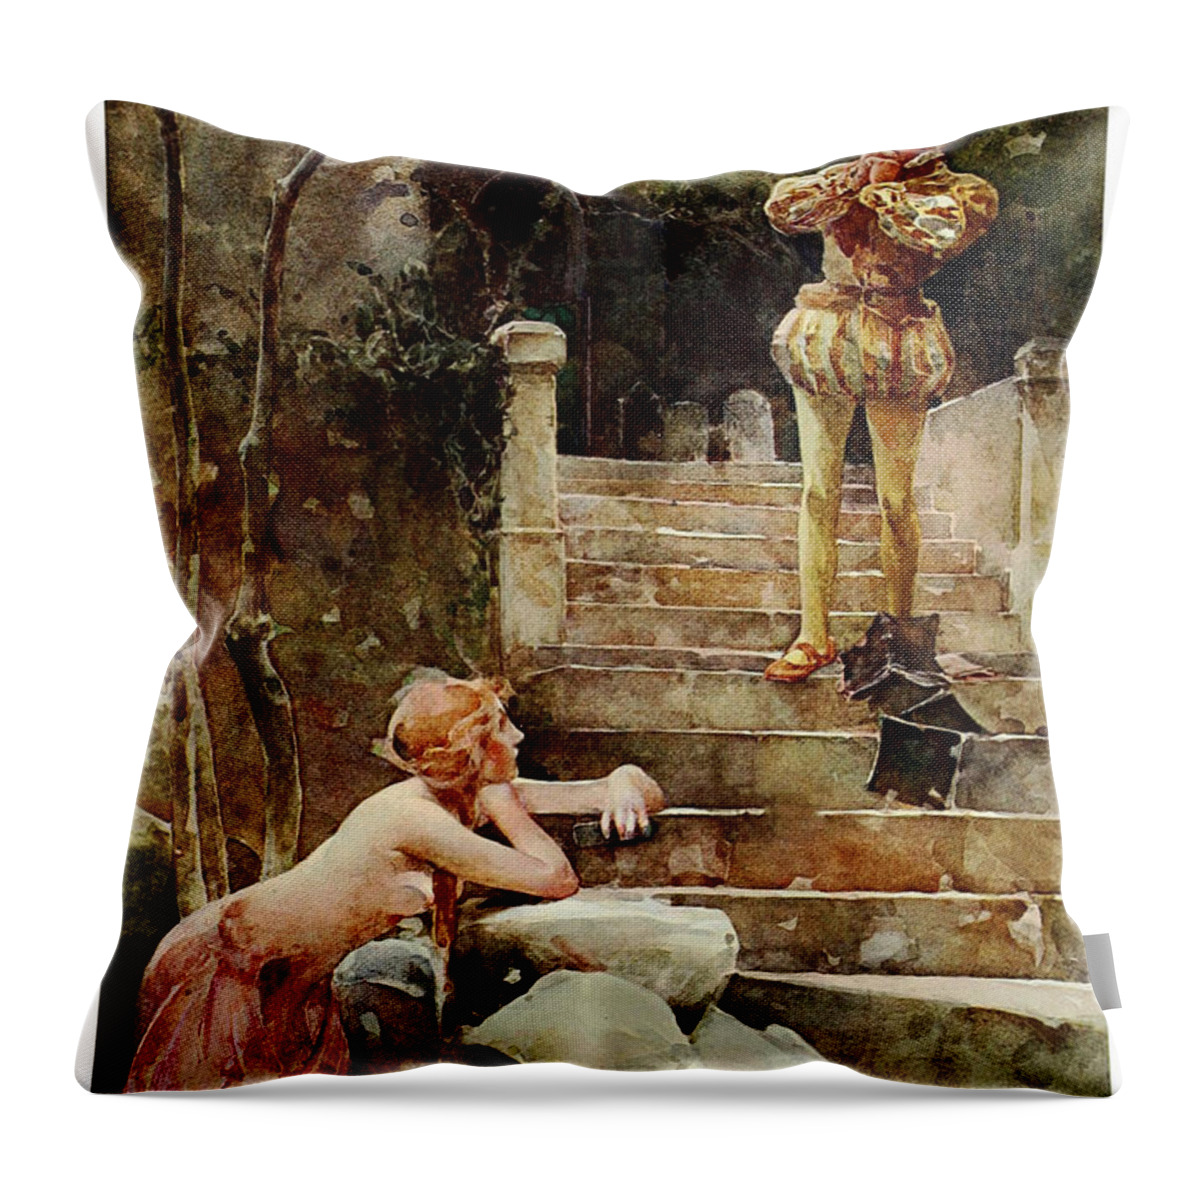 Mermaid Throw Pillow featuring the painting The Mermaid of Zennor by John Reinhard Weguelin